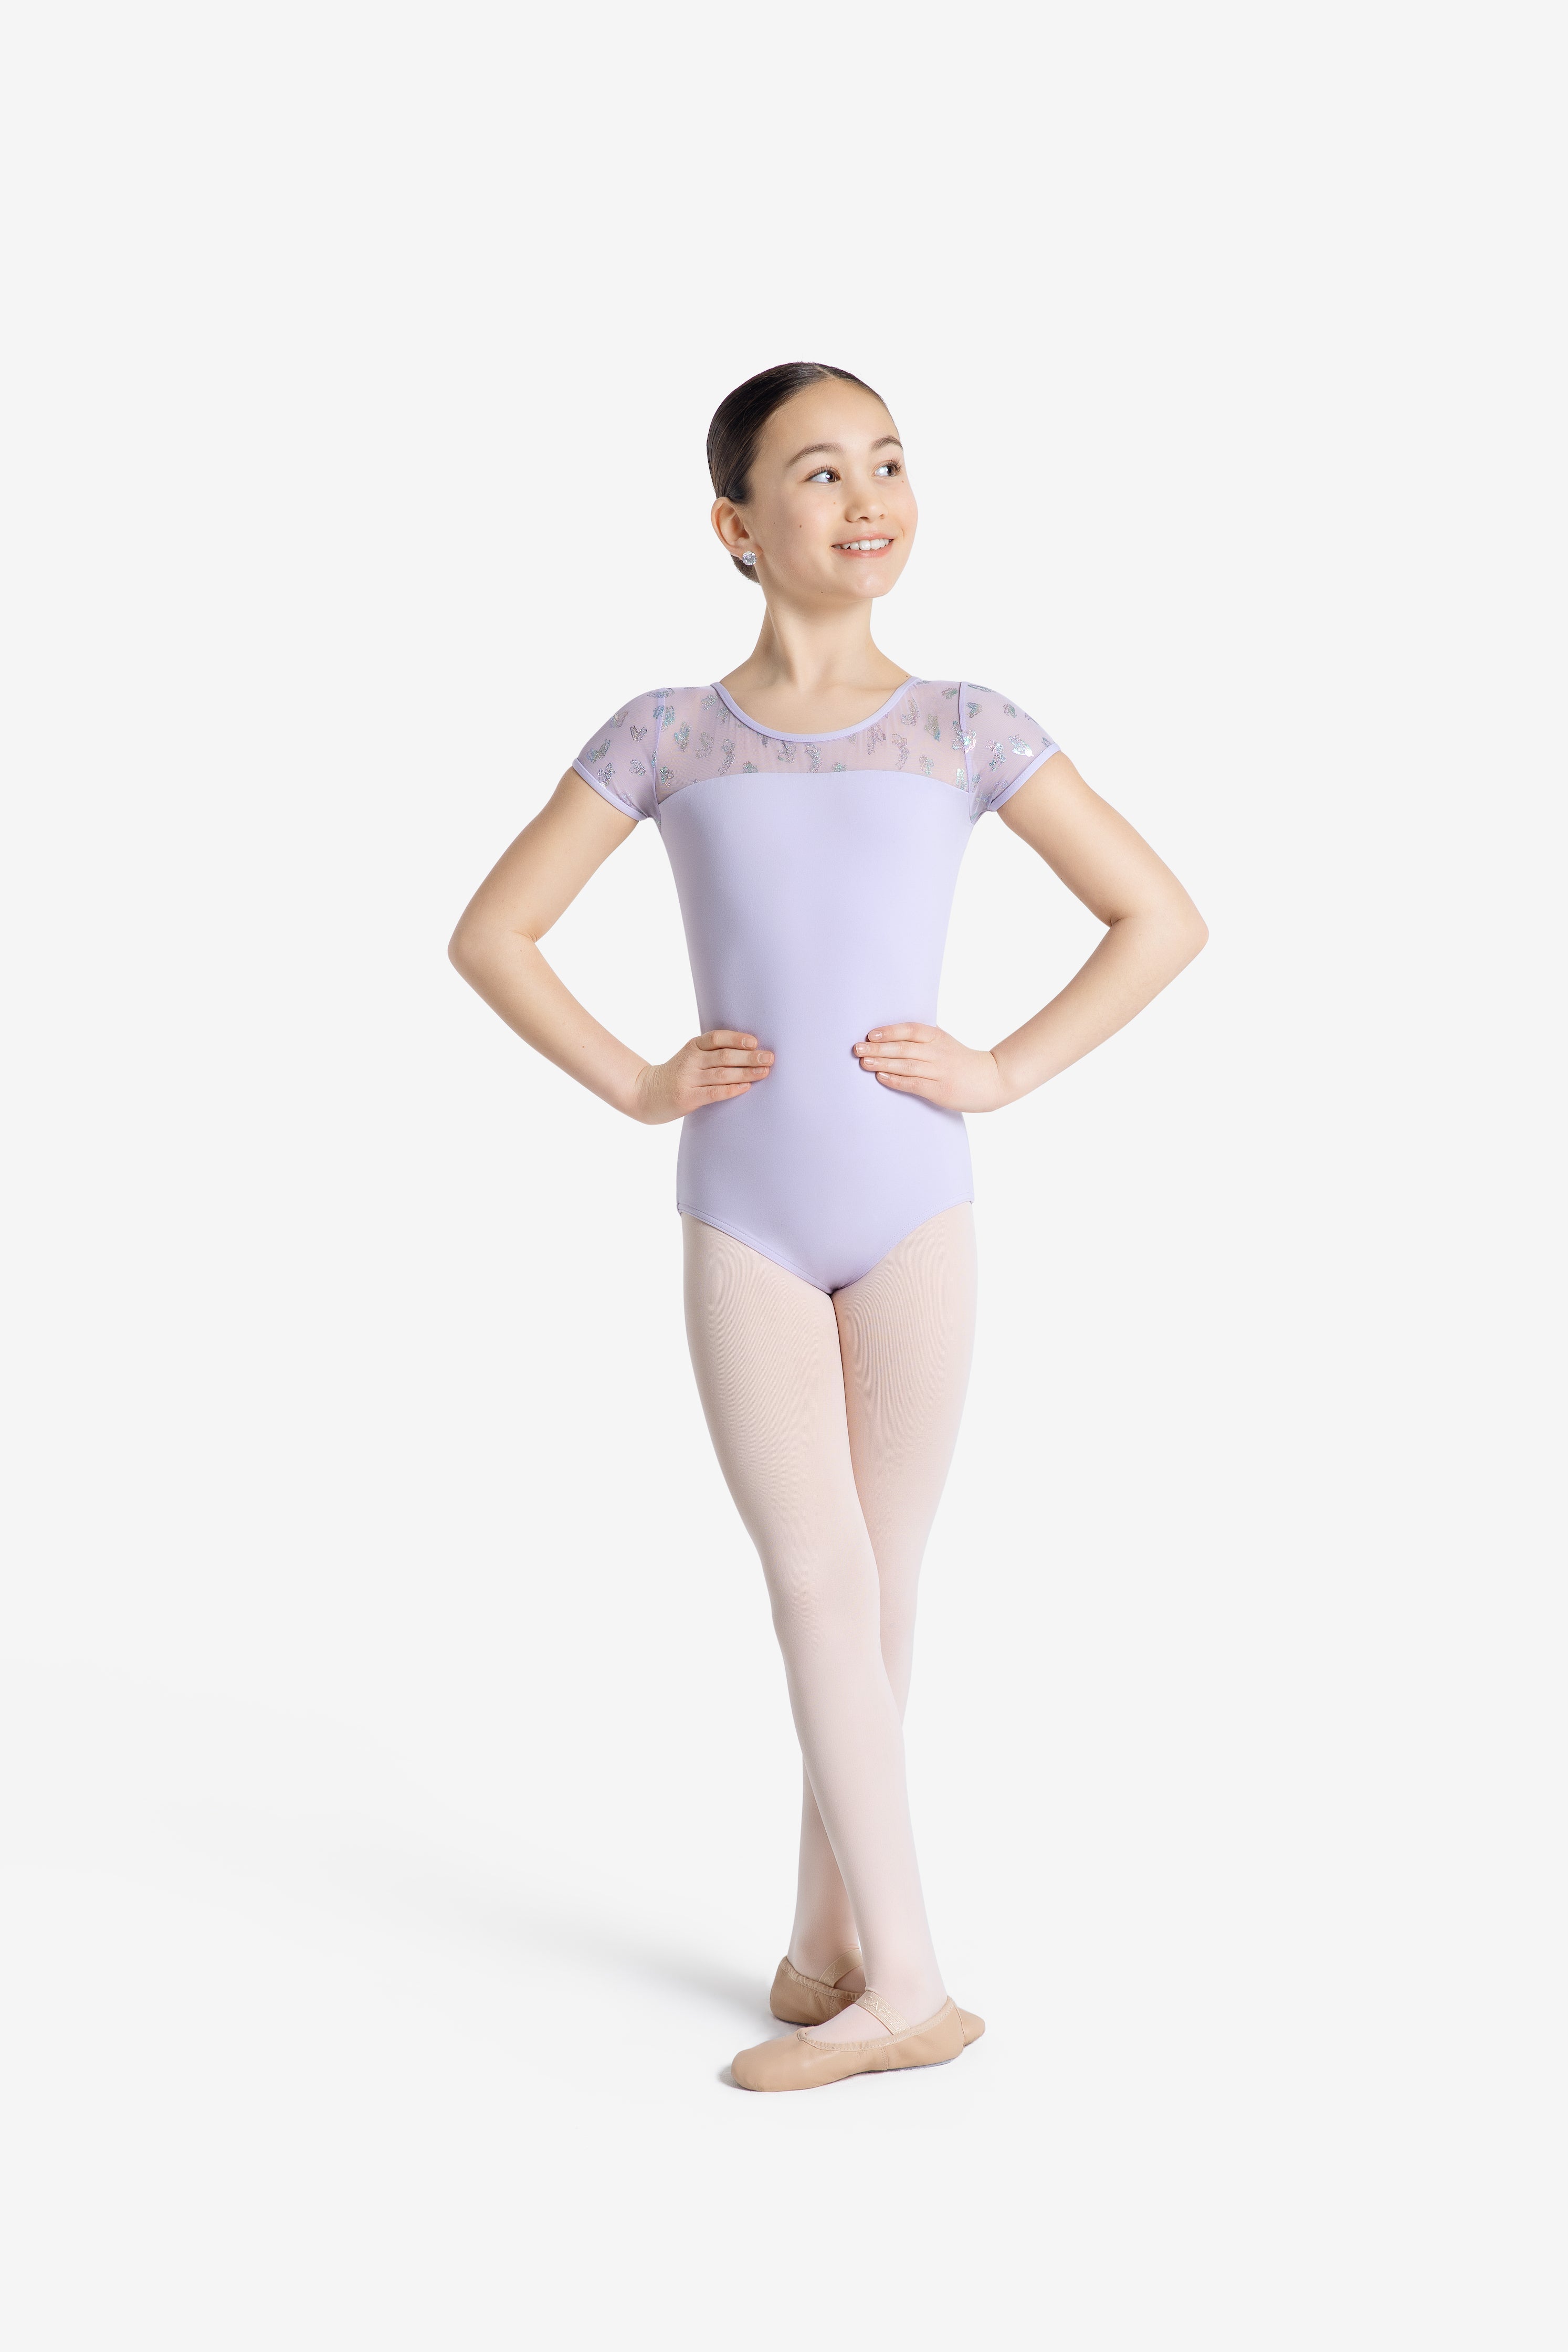 Body Wrappers Multi Spot Adjustable Camisole Girls Leotard 0266 : Dance Max  Dancewear